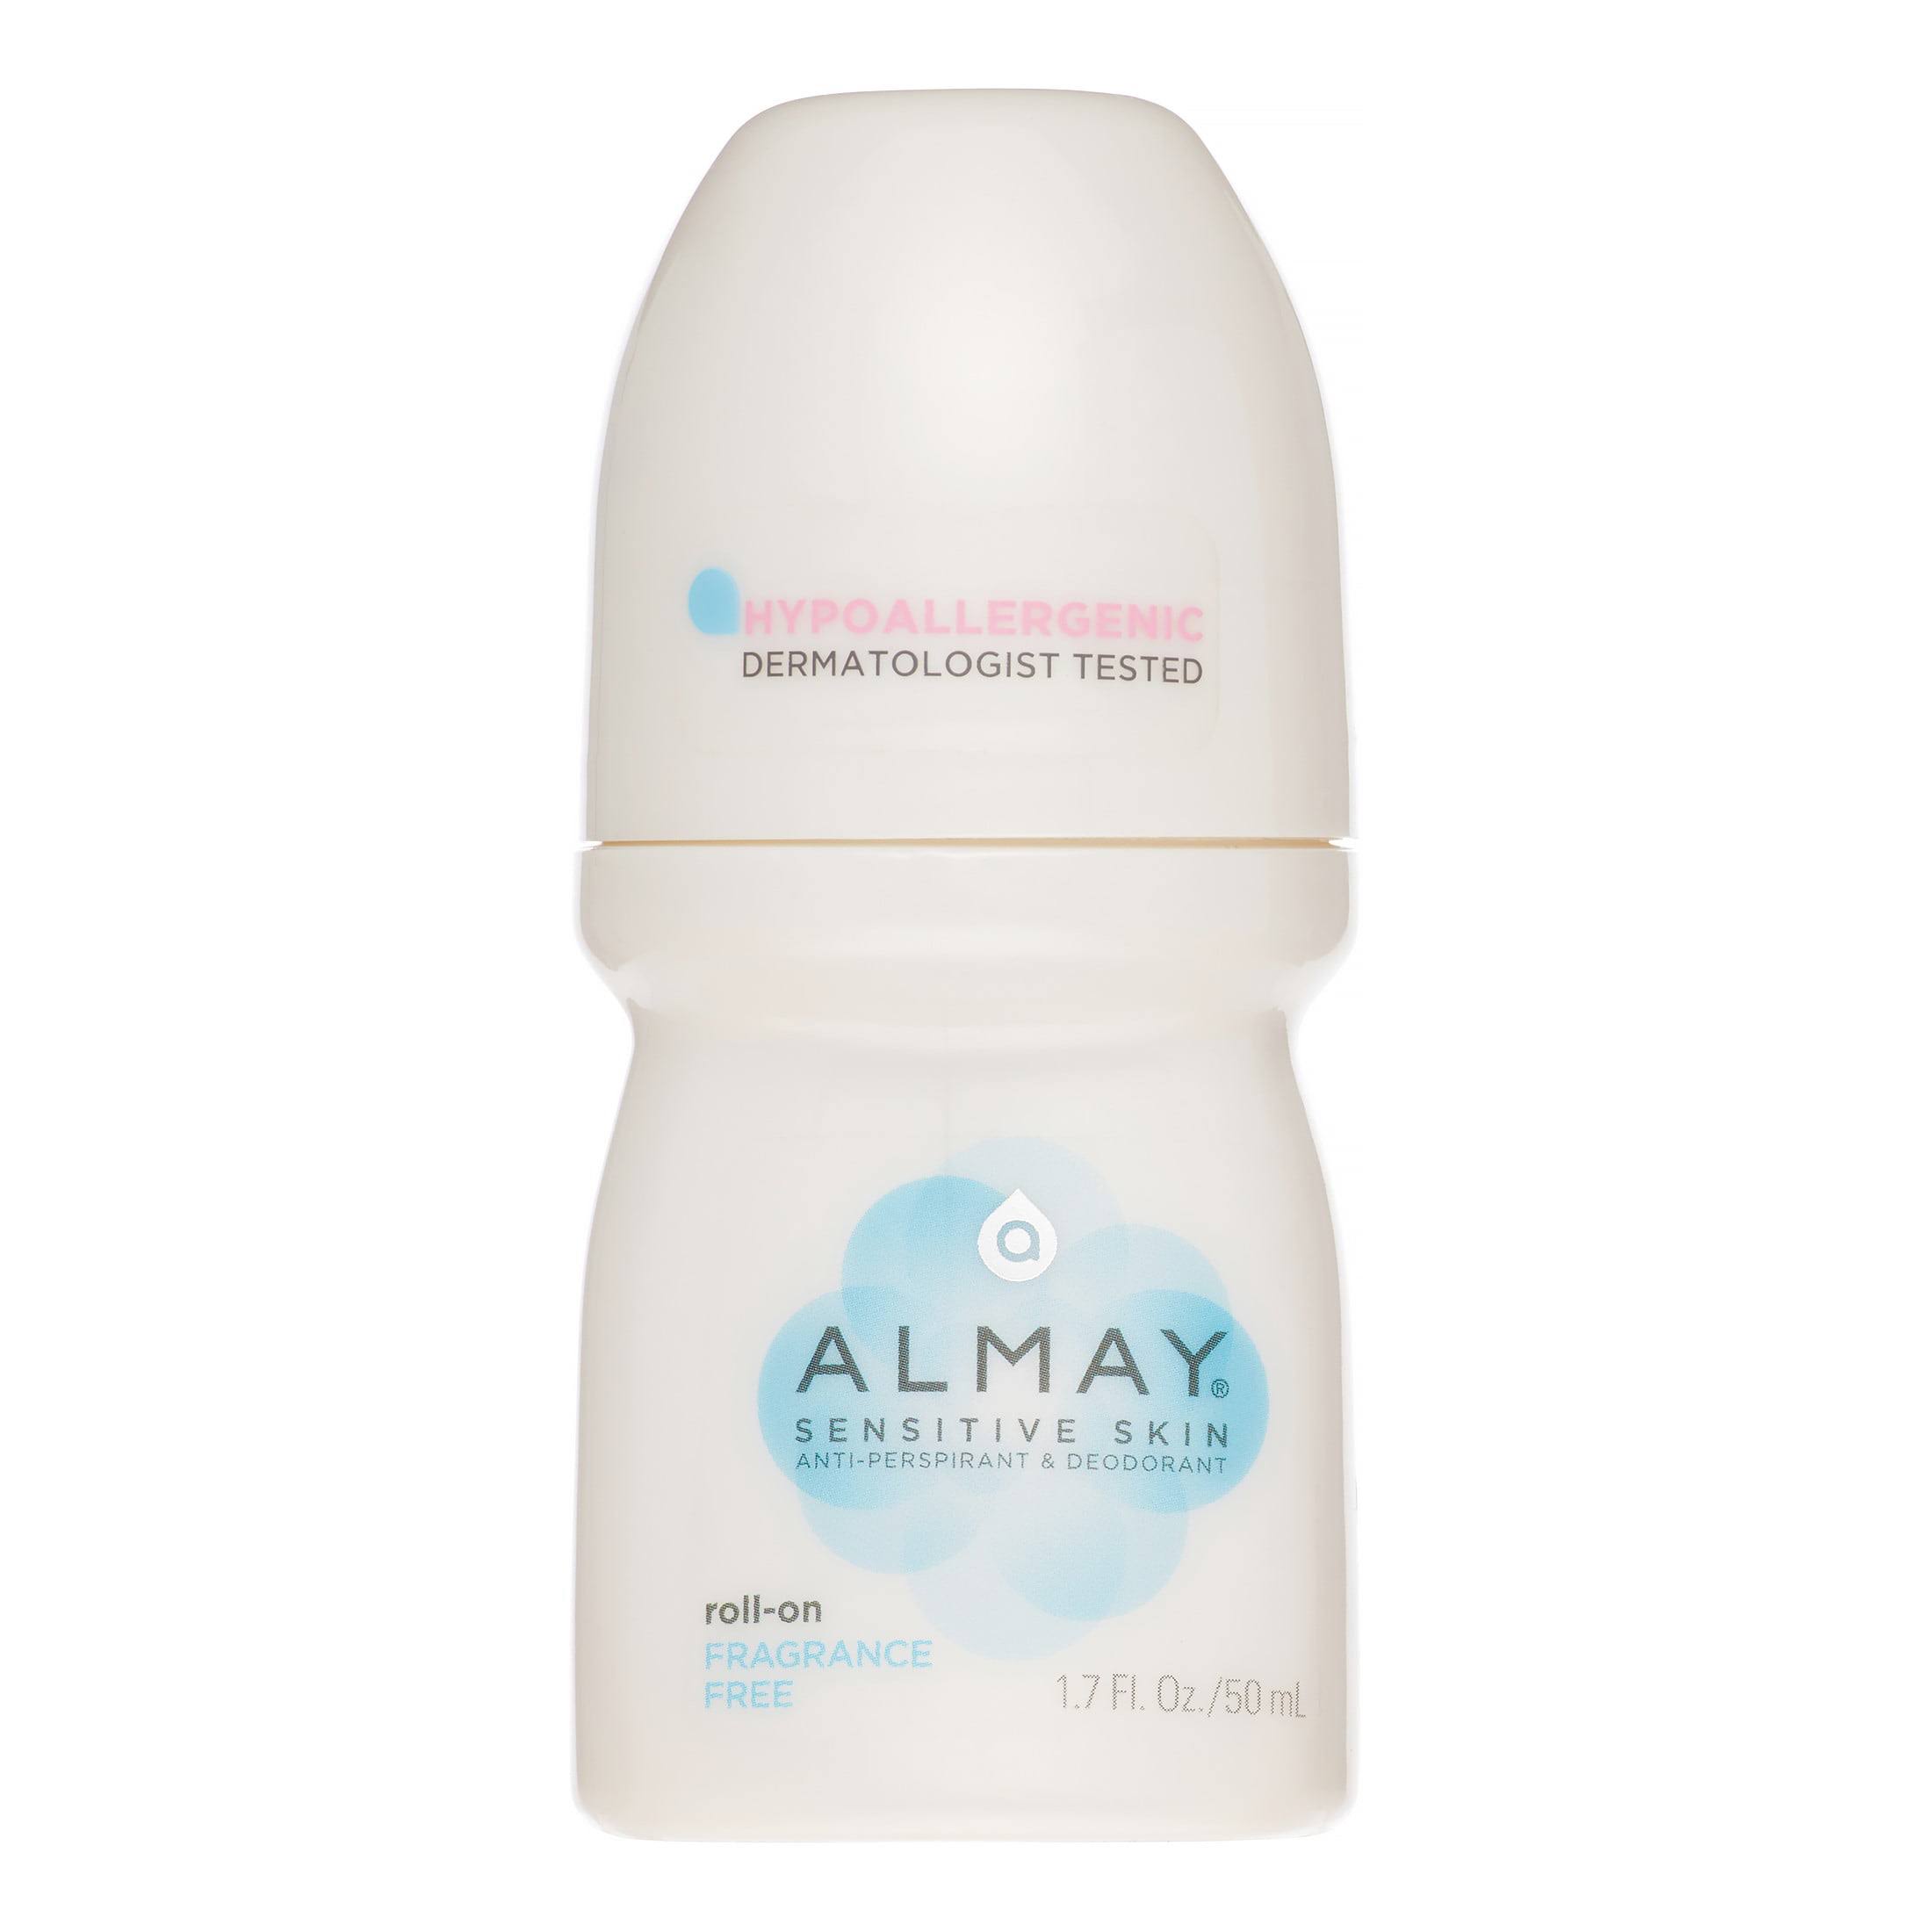 Almay Anti-Perspirant & Deodorant Sensitive Skin Roll-On Fragrance Free - 1.7oz